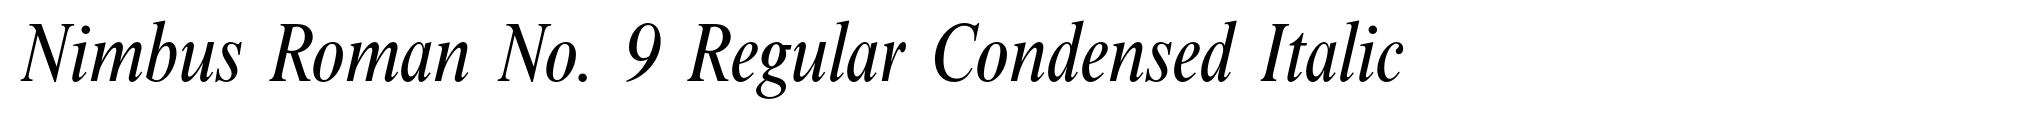 Nimbus Roman No. 9 Regular Condensed Italic image